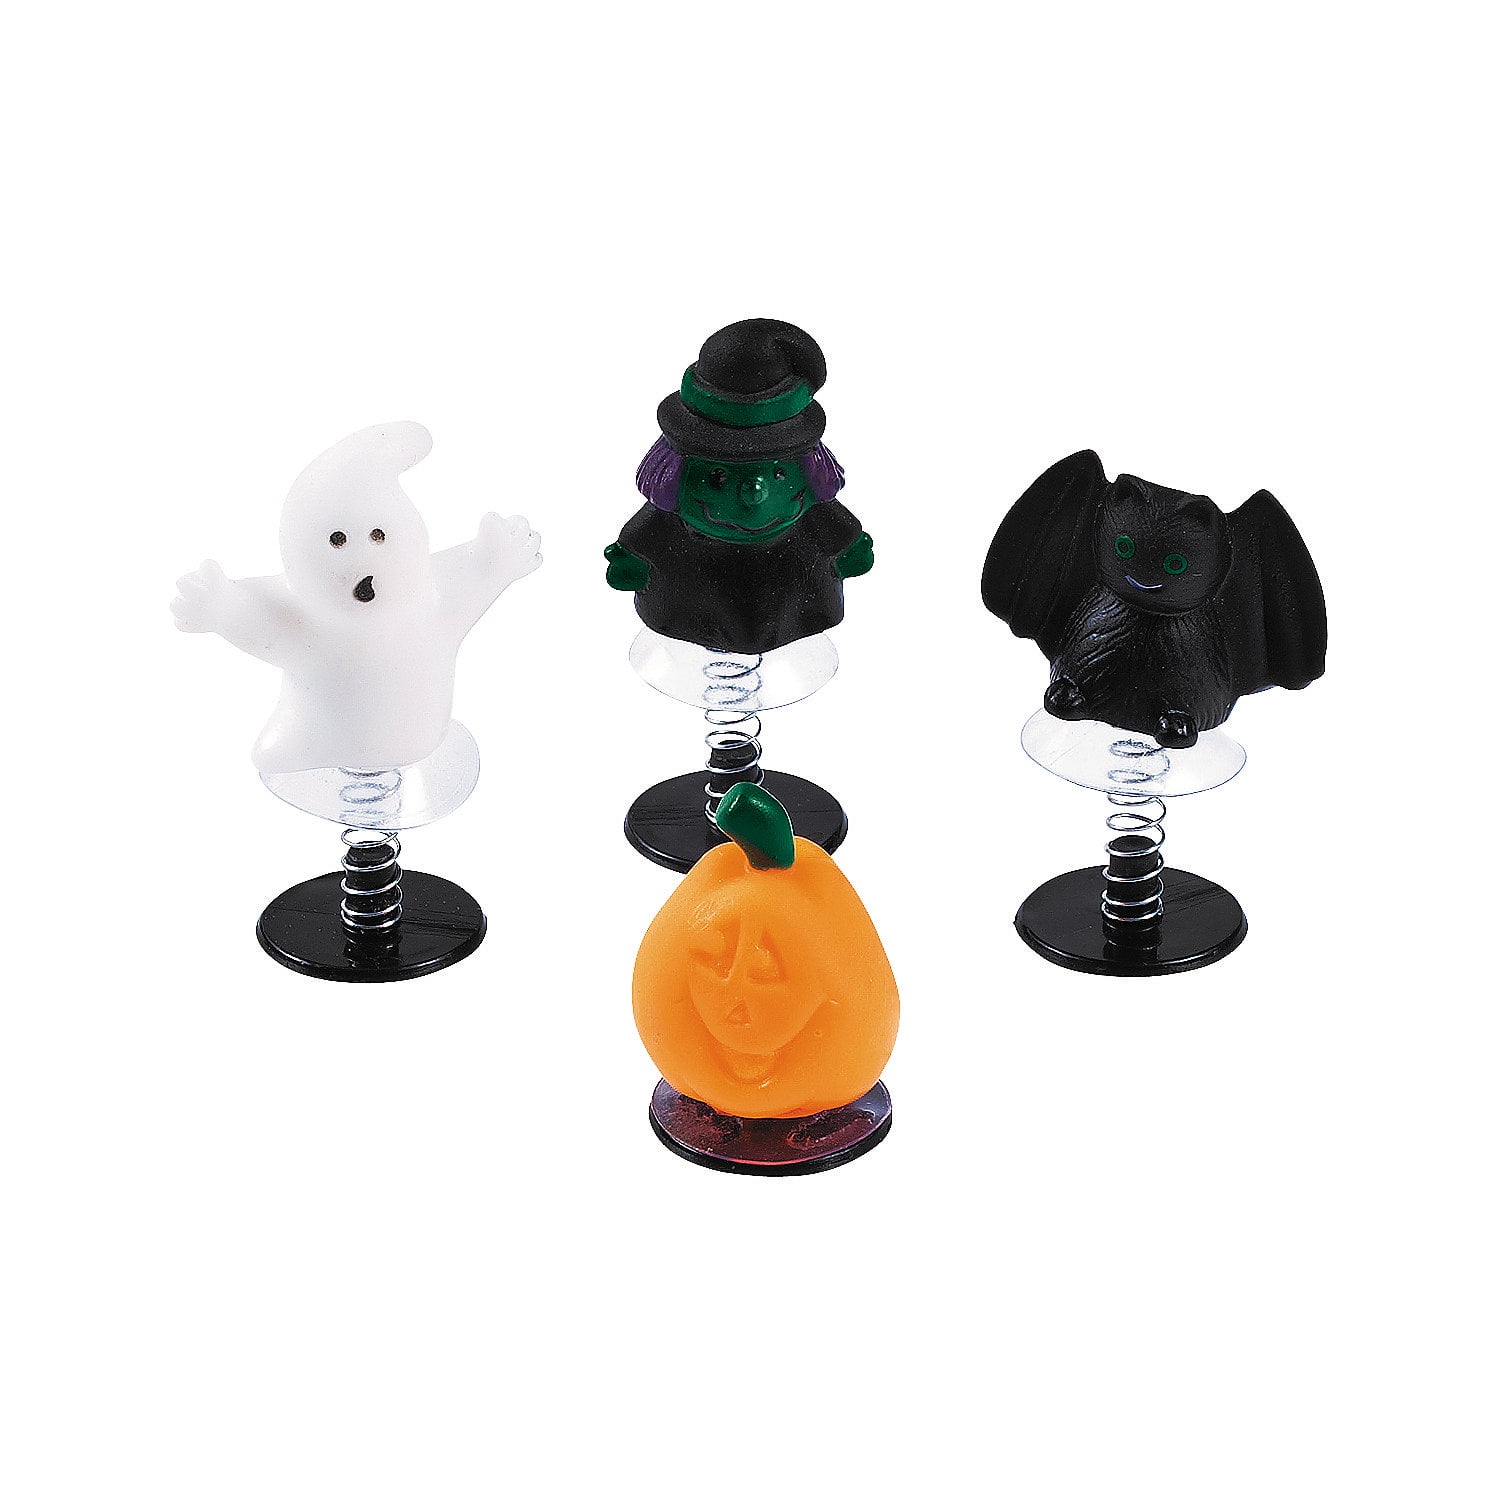 Mini Halloween Character ParatroopeR-4dz for Halloween Fun Express Character Toys Toys Halloween Wind Ups & Paratroopers 48 Pieces 